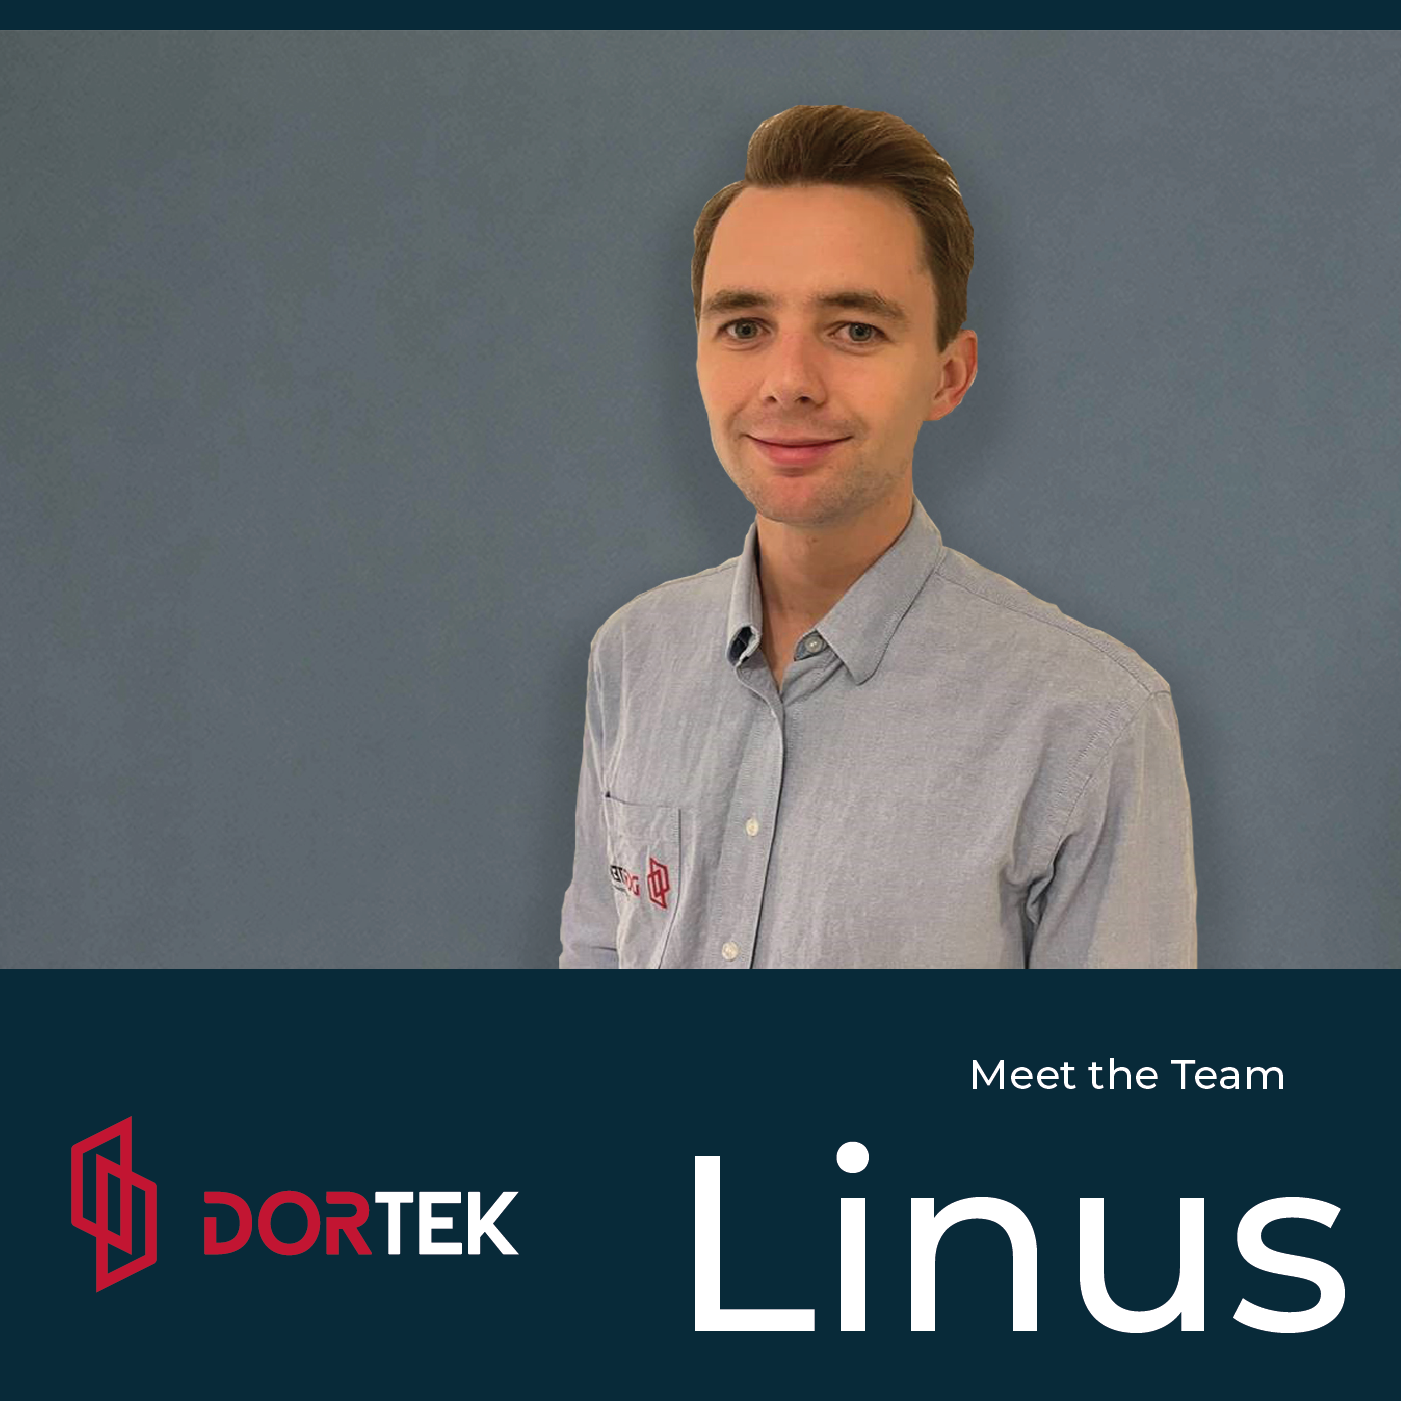 Meet the team, Linus.